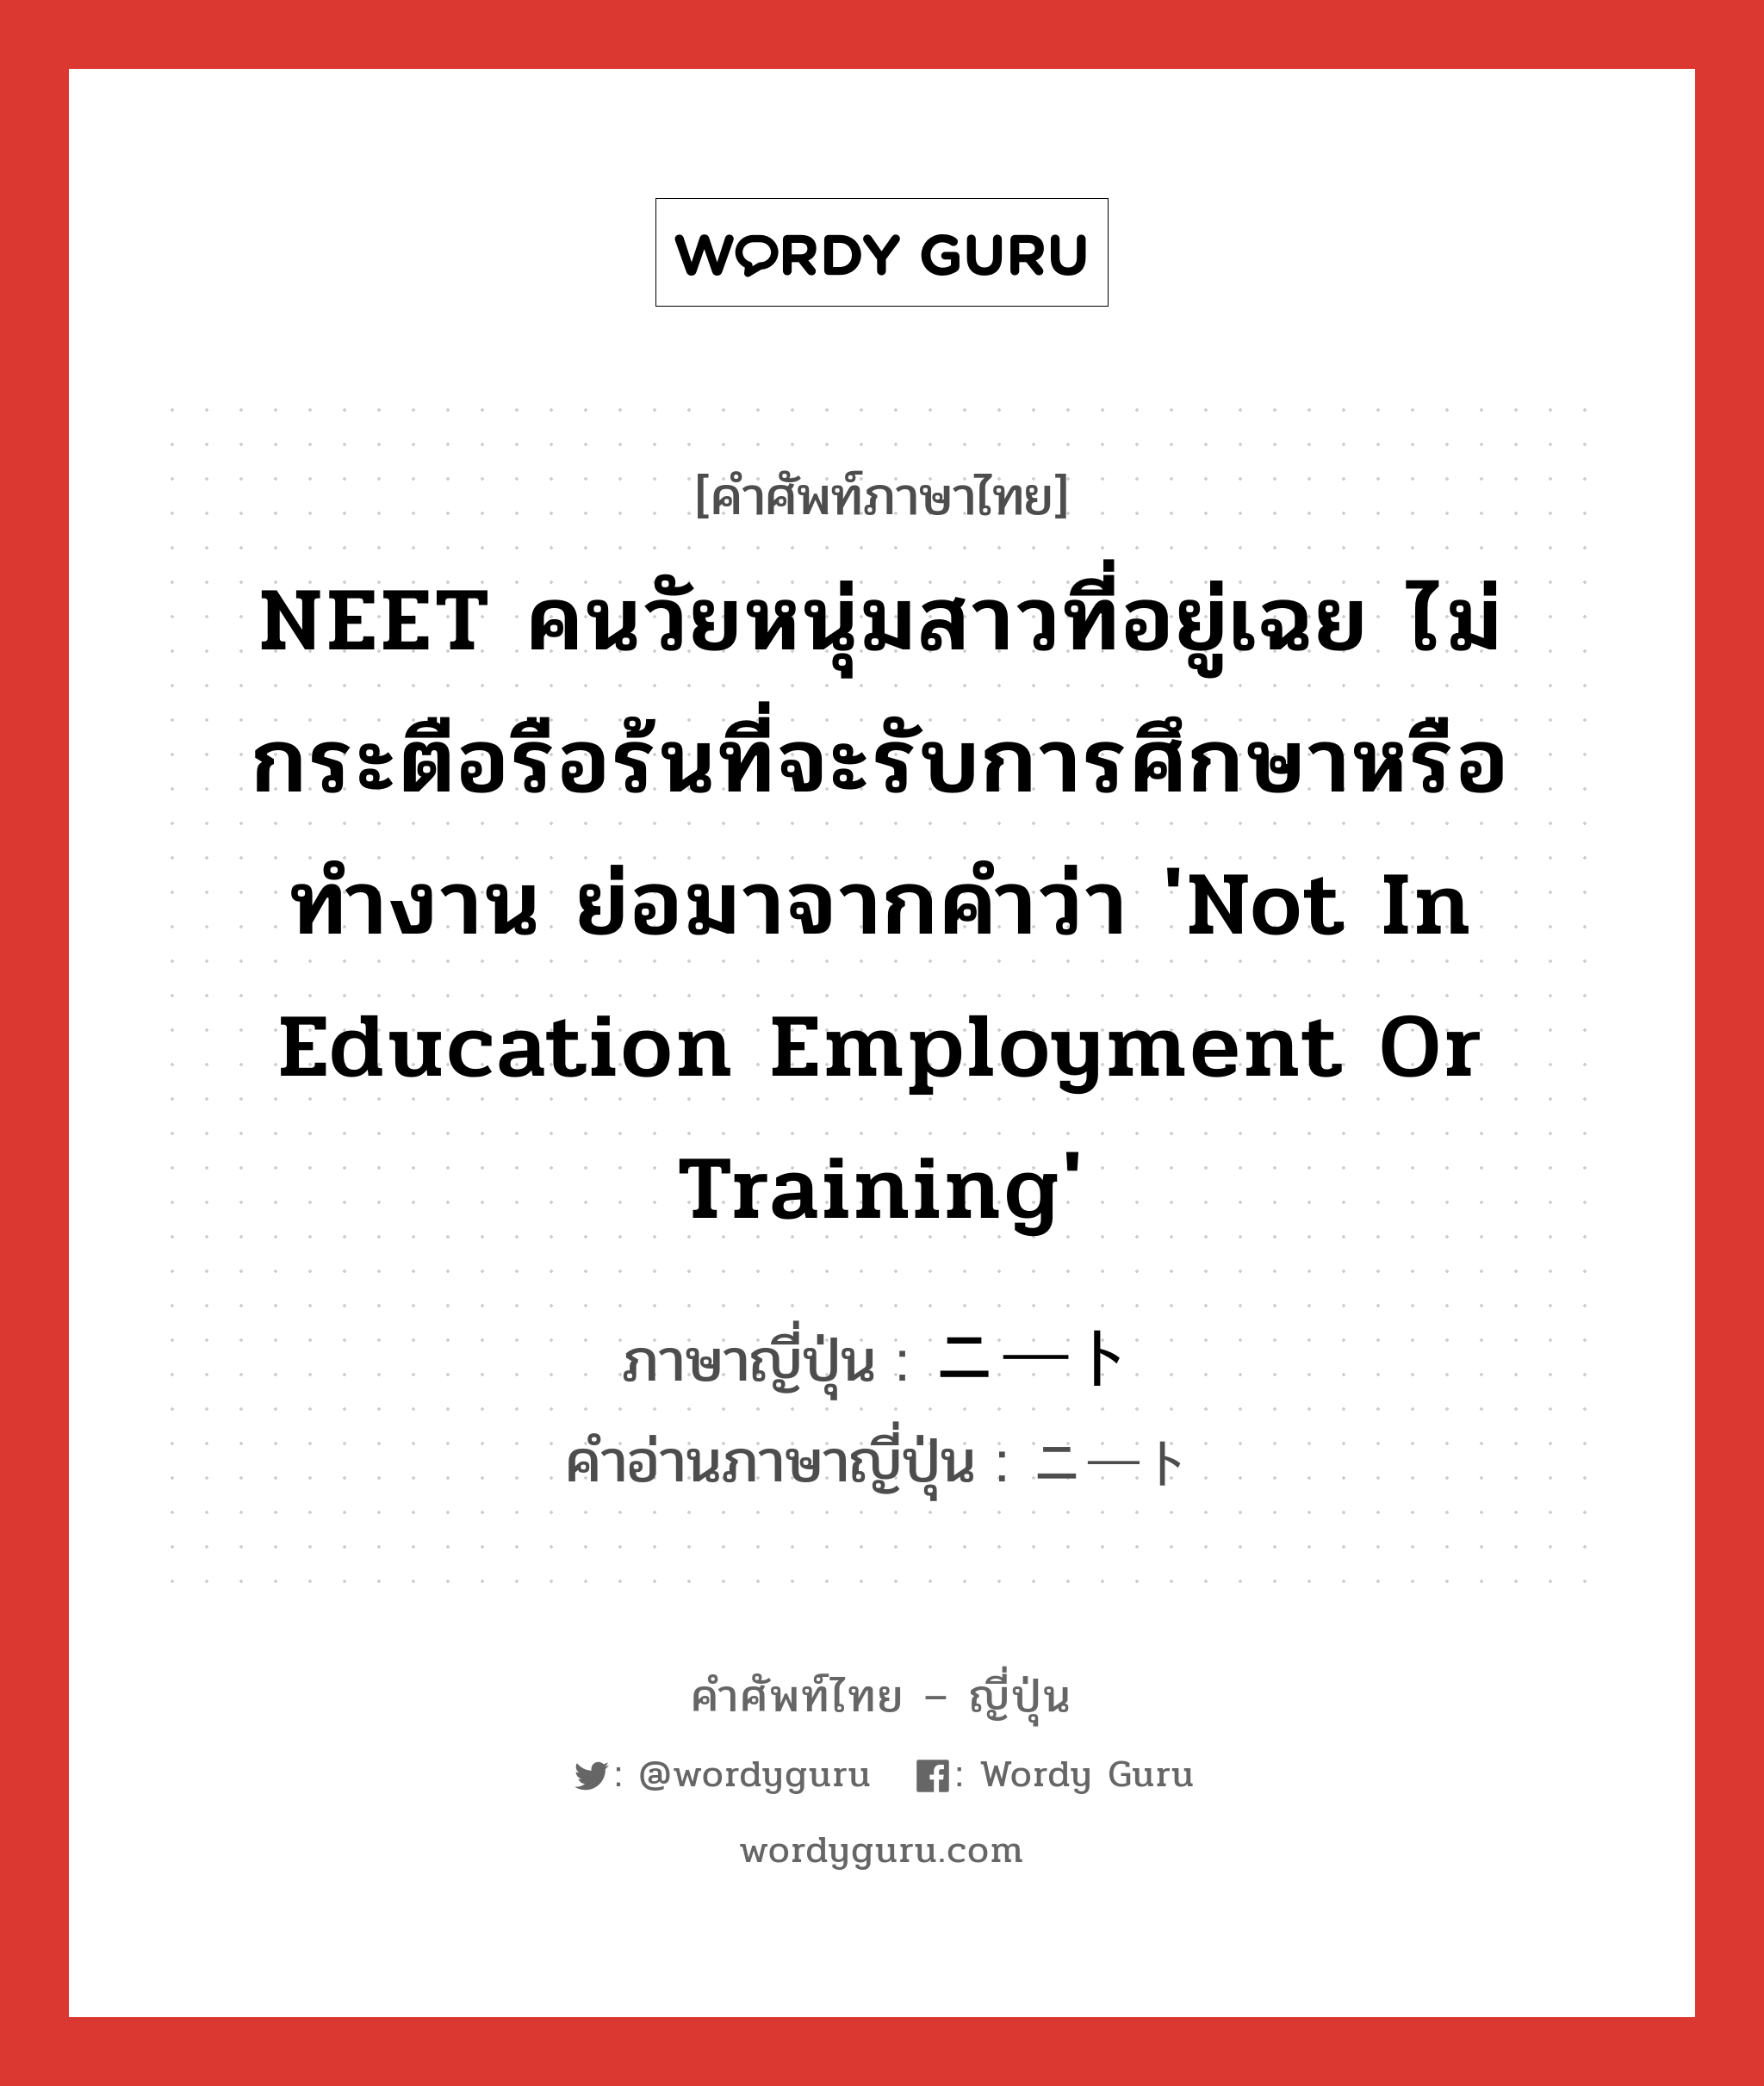 NEET คนวัยหนุ่มสาวที่อยู่เฉย ไม่กระตือรือร้นที่จะรับการศึกษาหรือทำงาน ย่อมาจากคำว่า 'Not in Education Employment or Training' ภาษาญี่ปุ่นคืออะไร, คำศัพท์ภาษาไทย - ญี่ปุ่น NEET คนวัยหนุ่มสาวที่อยู่เฉย ไม่กระตือรือร้นที่จะรับการศึกษาหรือทำงาน ย่อมาจากคำว่า 'Not in Education Employment or Training' ภาษาญี่ปุ่น ニート คำอ่านภาษาญี่ปุ่น ニート หมวด adj-na หมวด adj-na